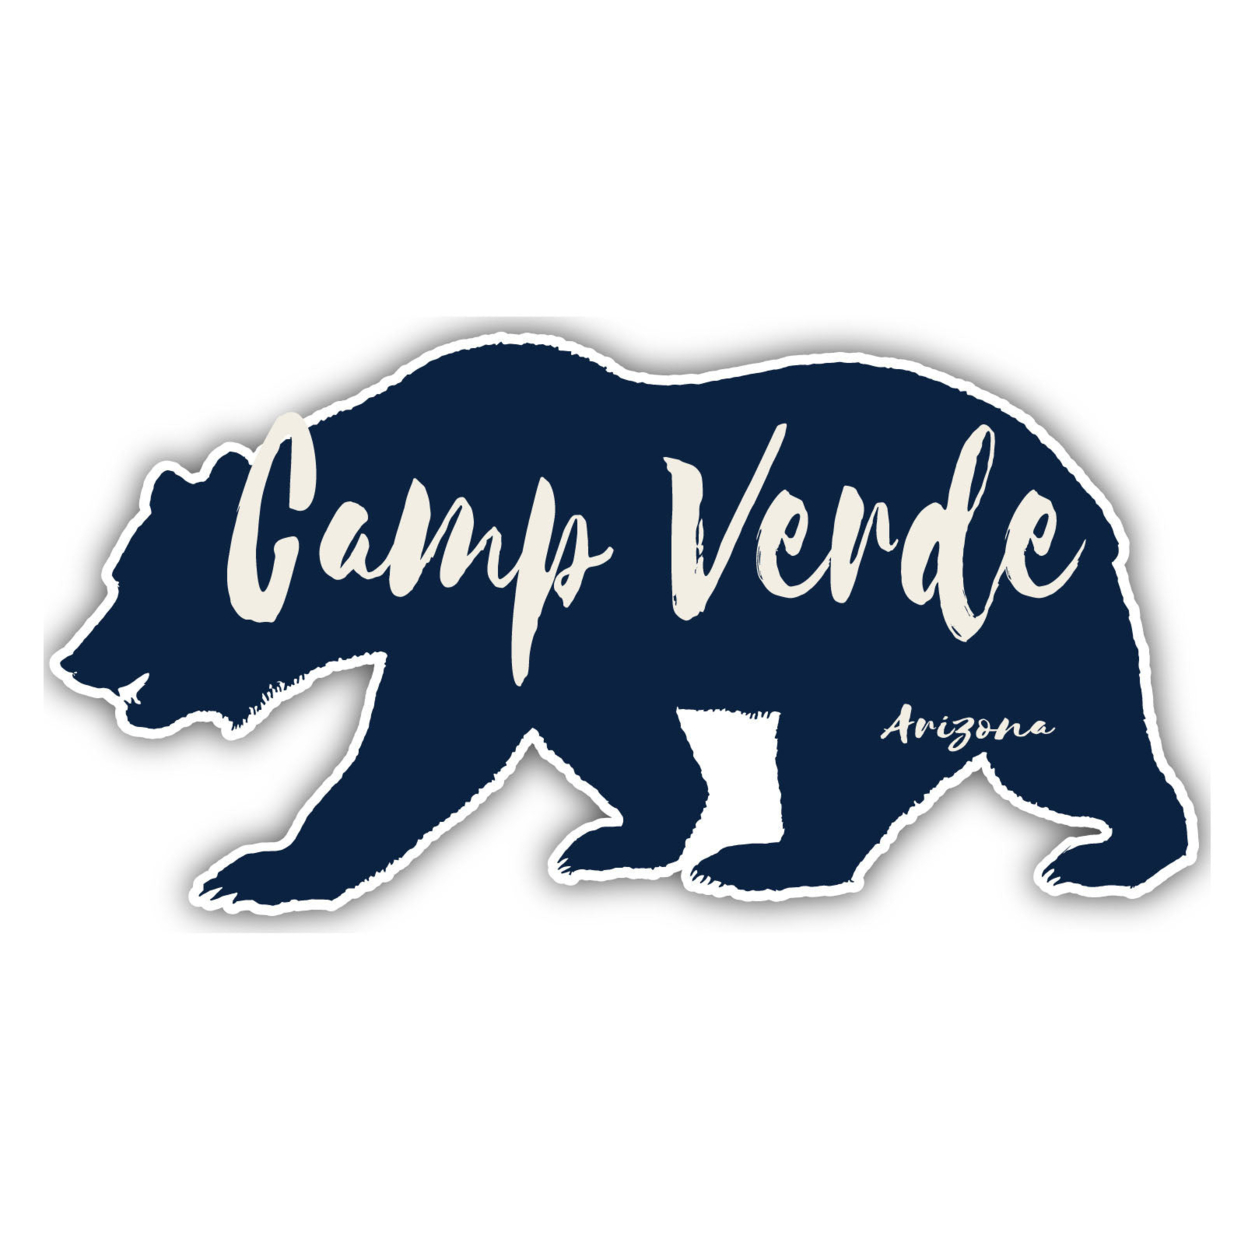 Camp Verde Arizona Souvenir Decorative Stickers (Choose Theme And Size) - 4-Pack, 12-Inch, Tent